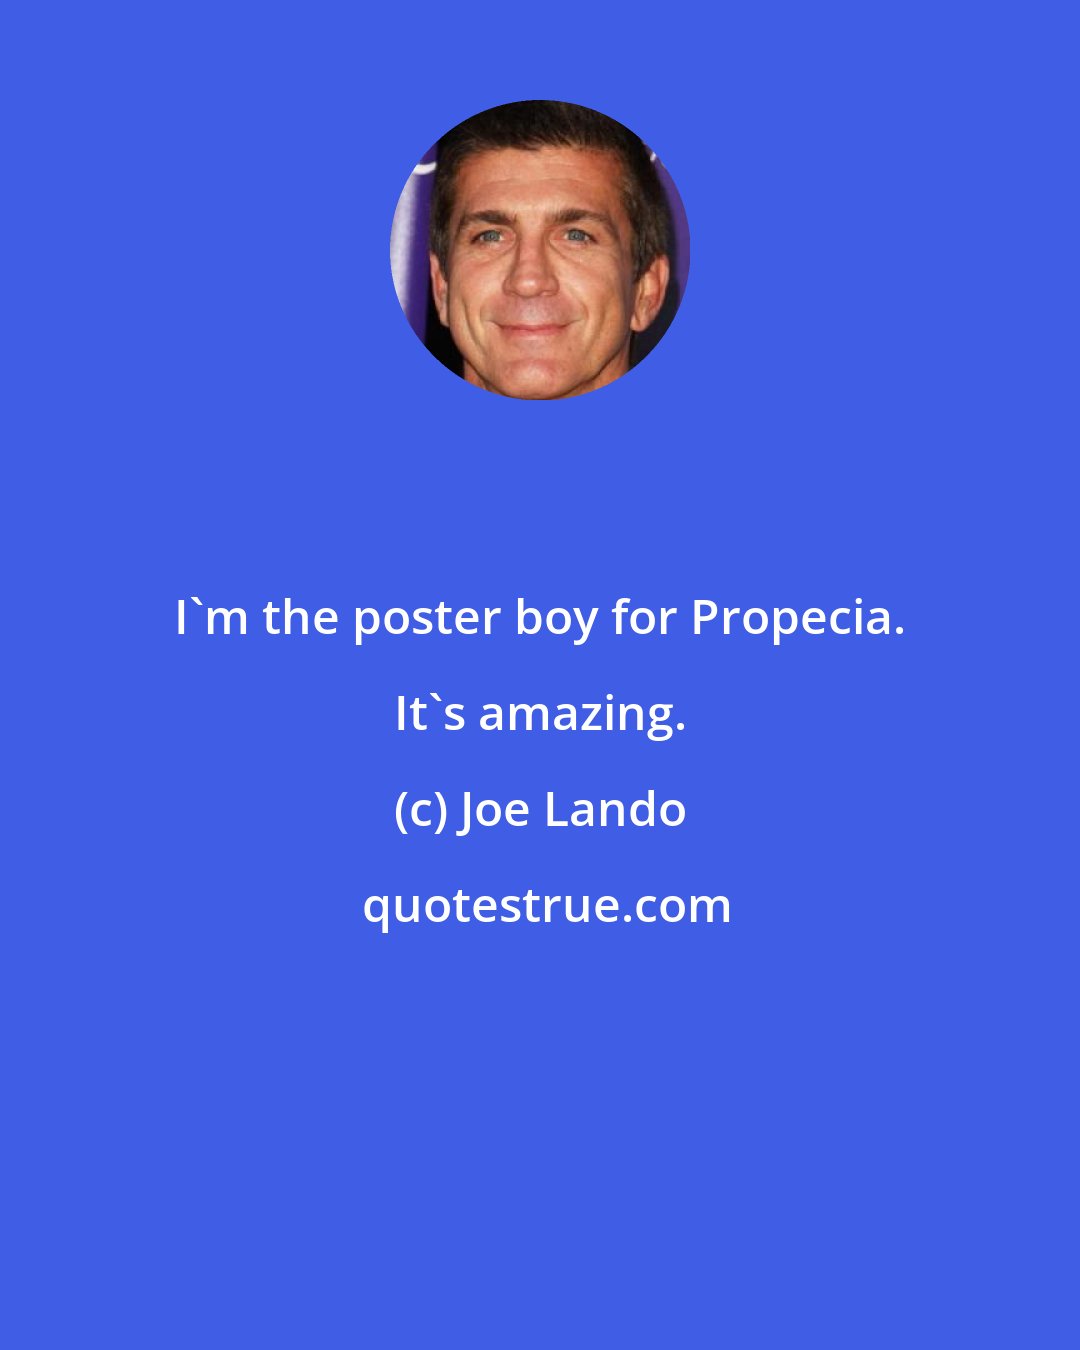 Joe Lando: I'm the poster boy for Propecia. It's amazing.